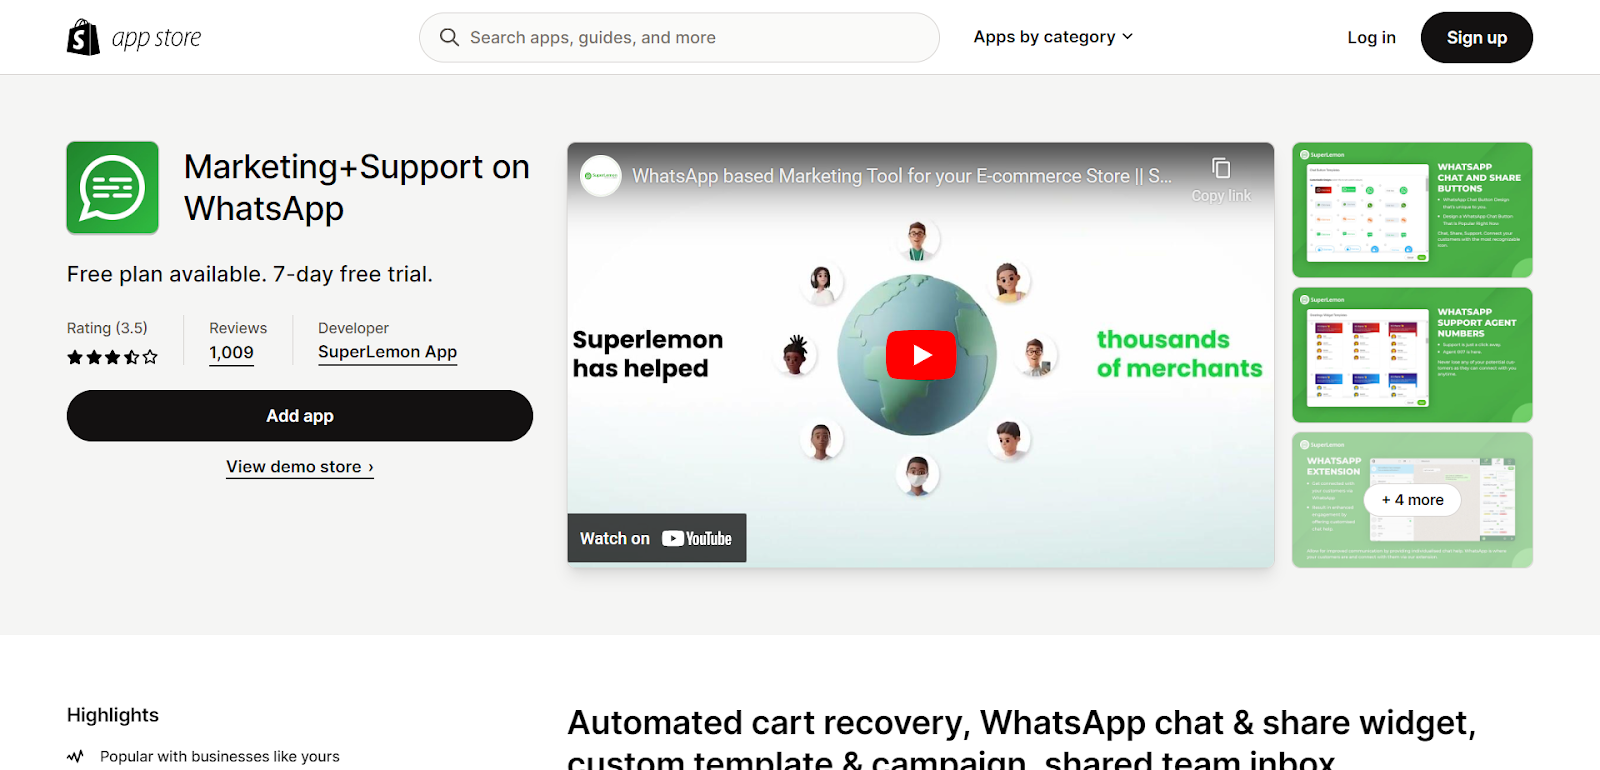 Marketing+Support On WhatsApp 